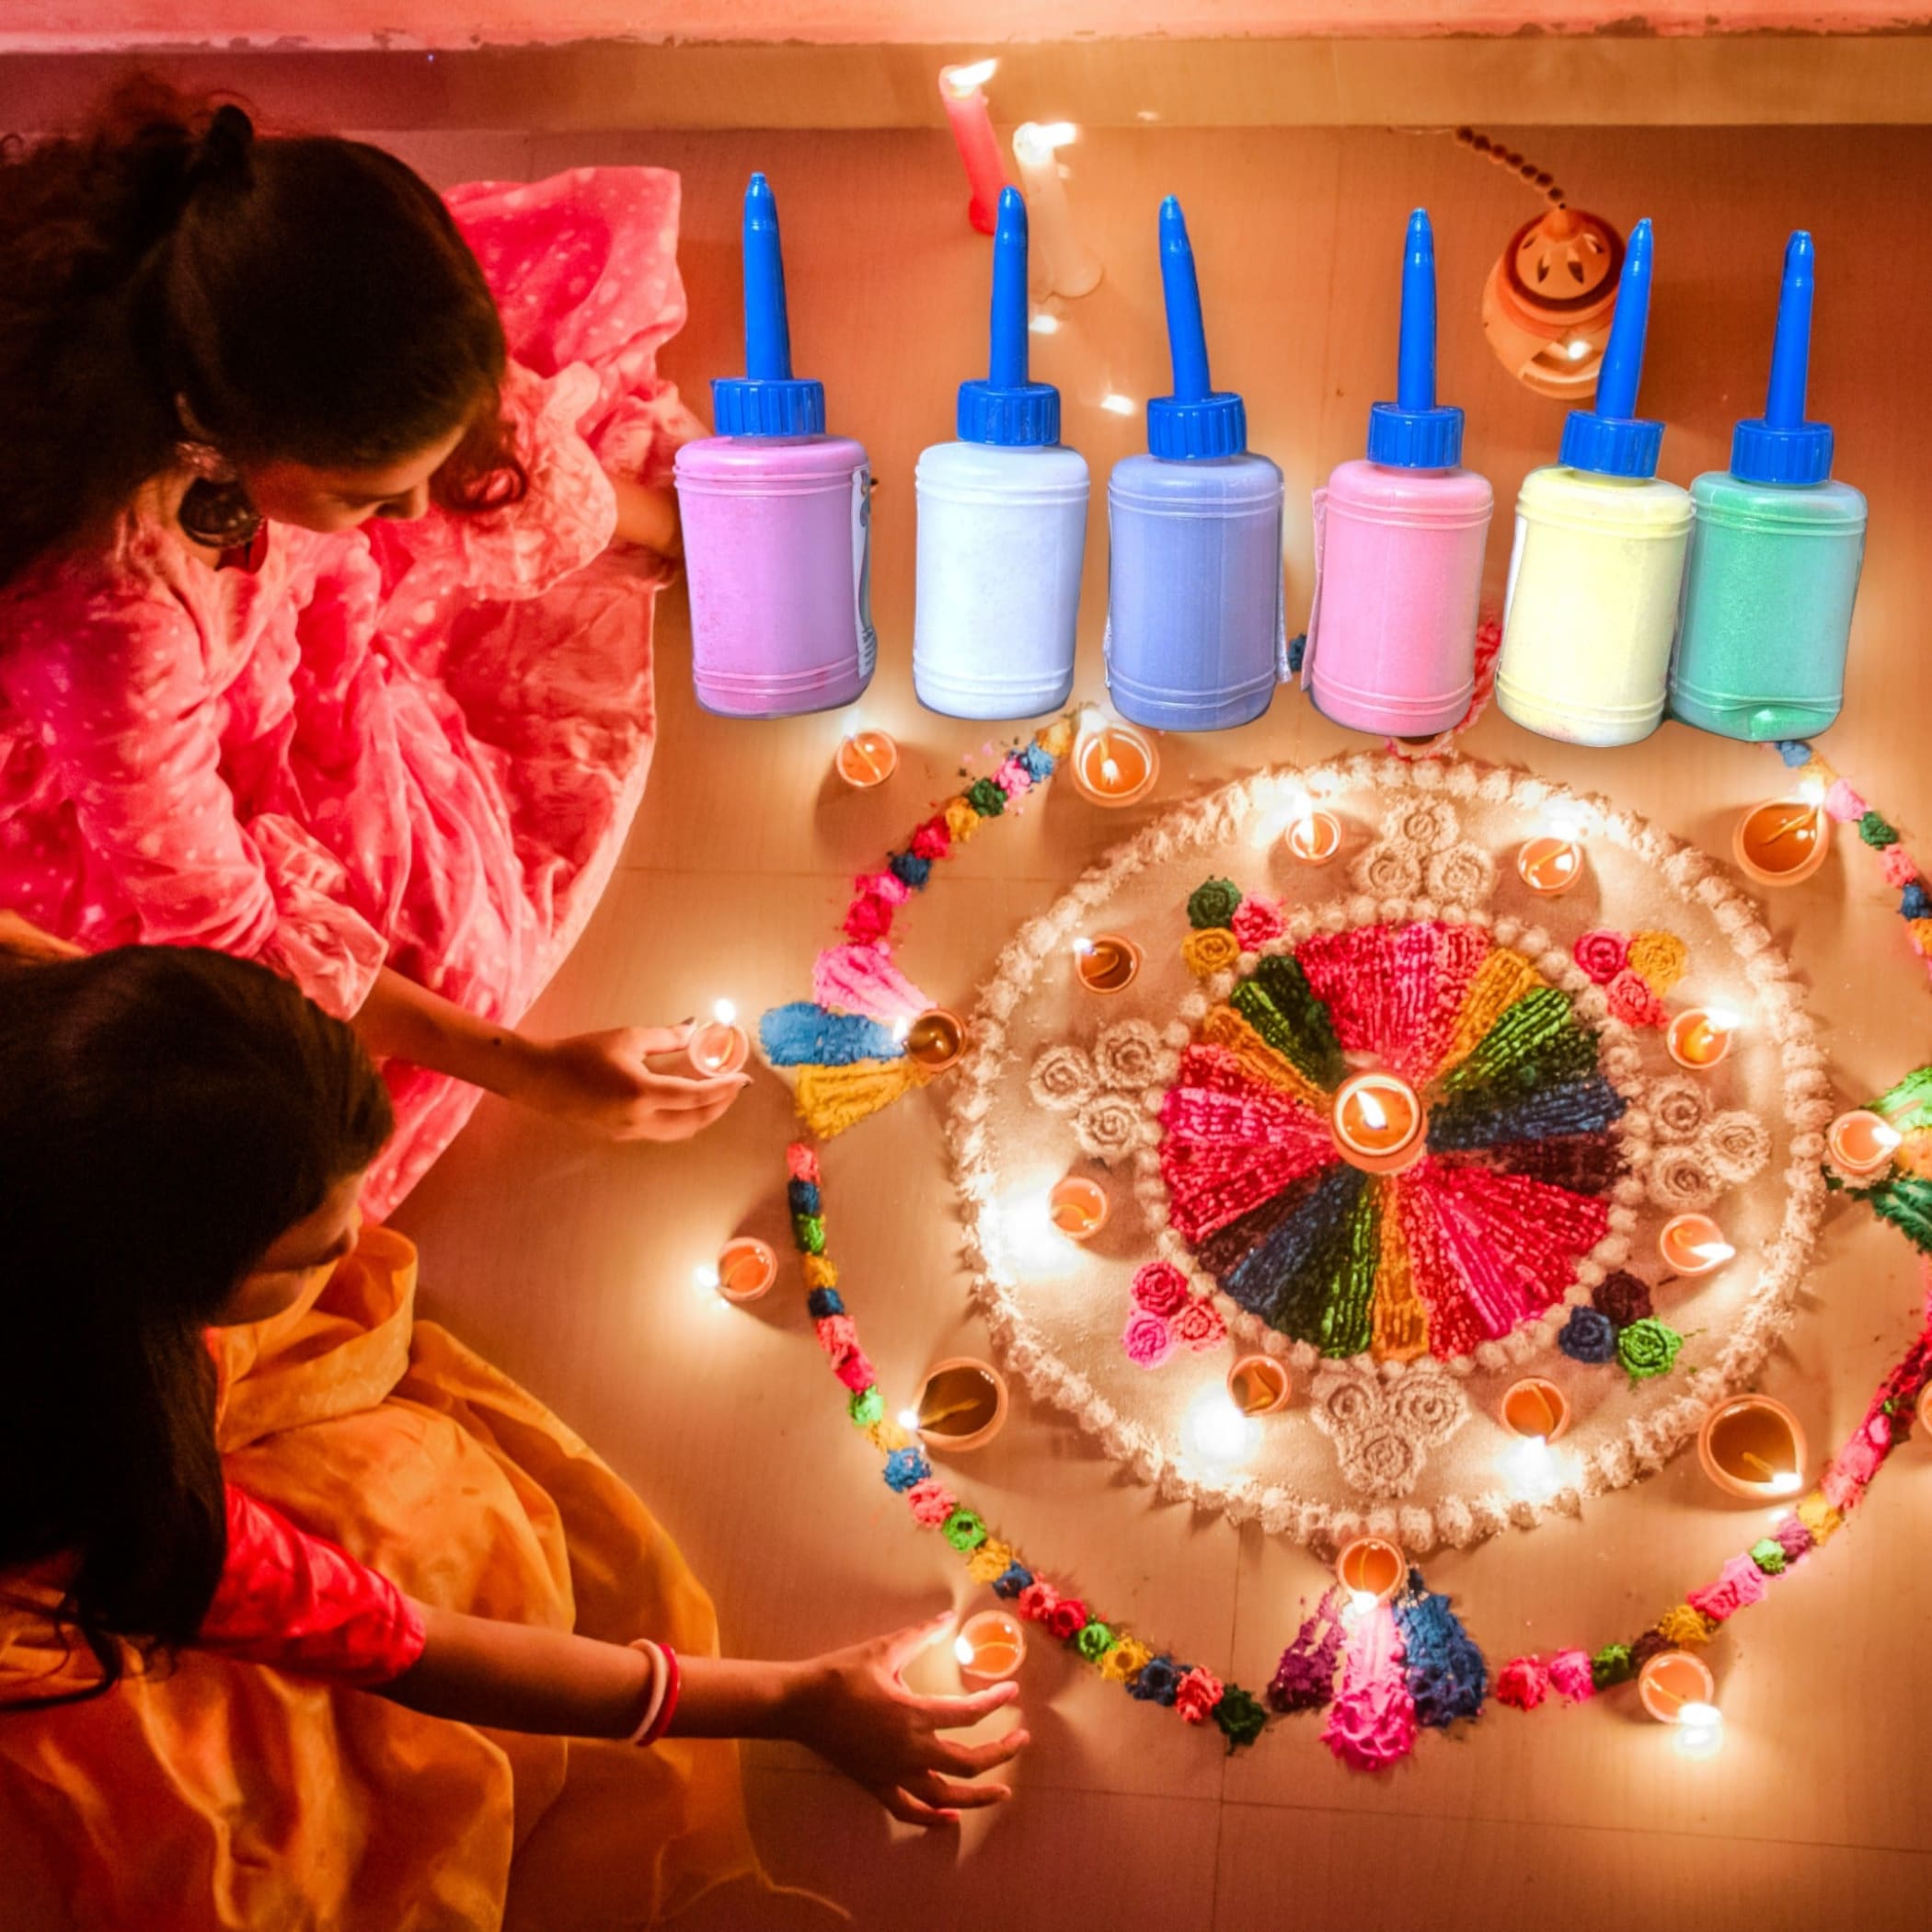 6 color rangoli powder kit colors decorations making for